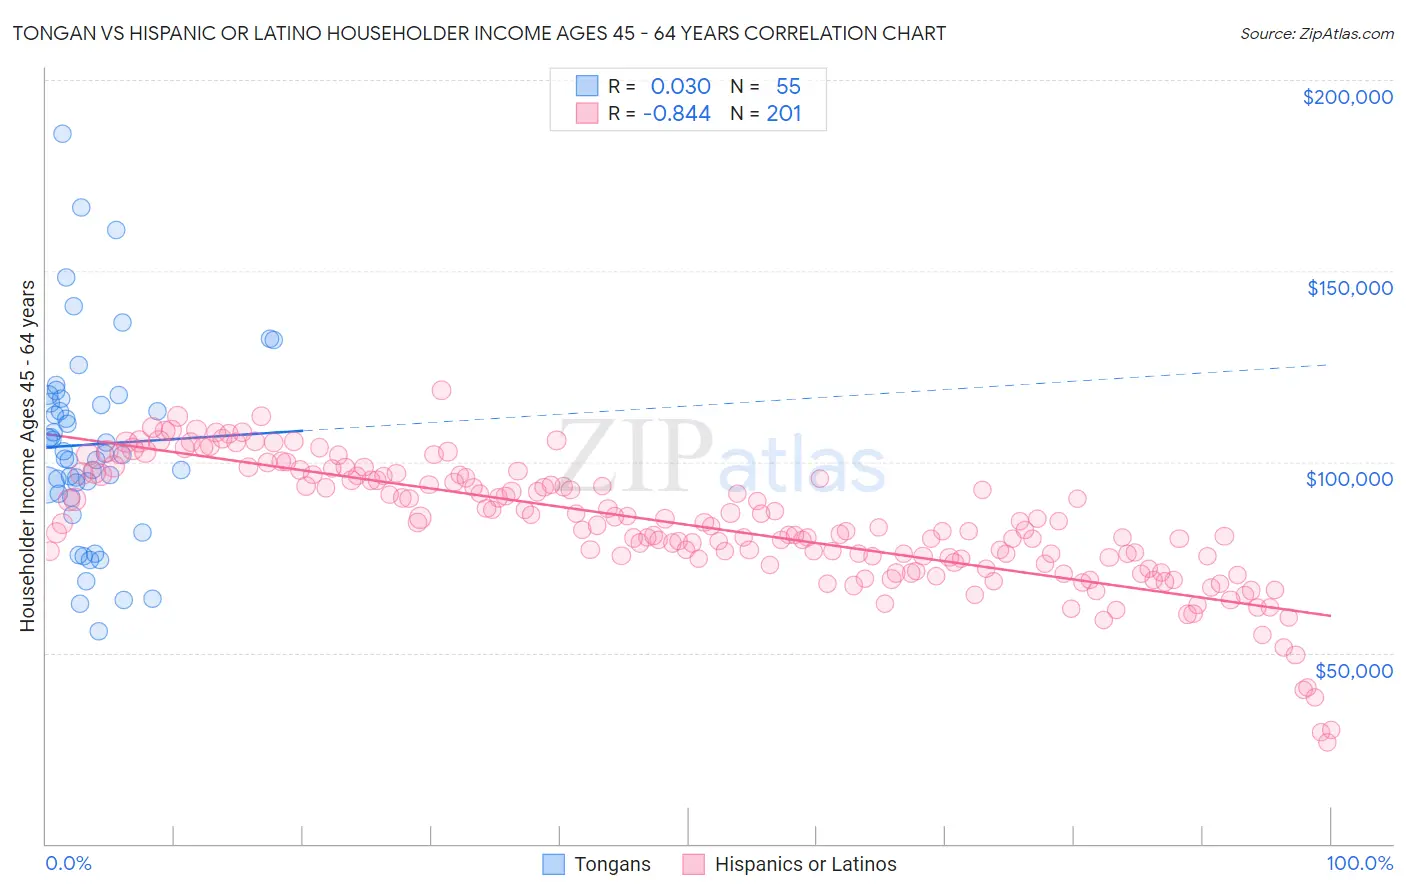 Tongan vs Hispanic or Latino Householder Income Ages 45 - 64 years